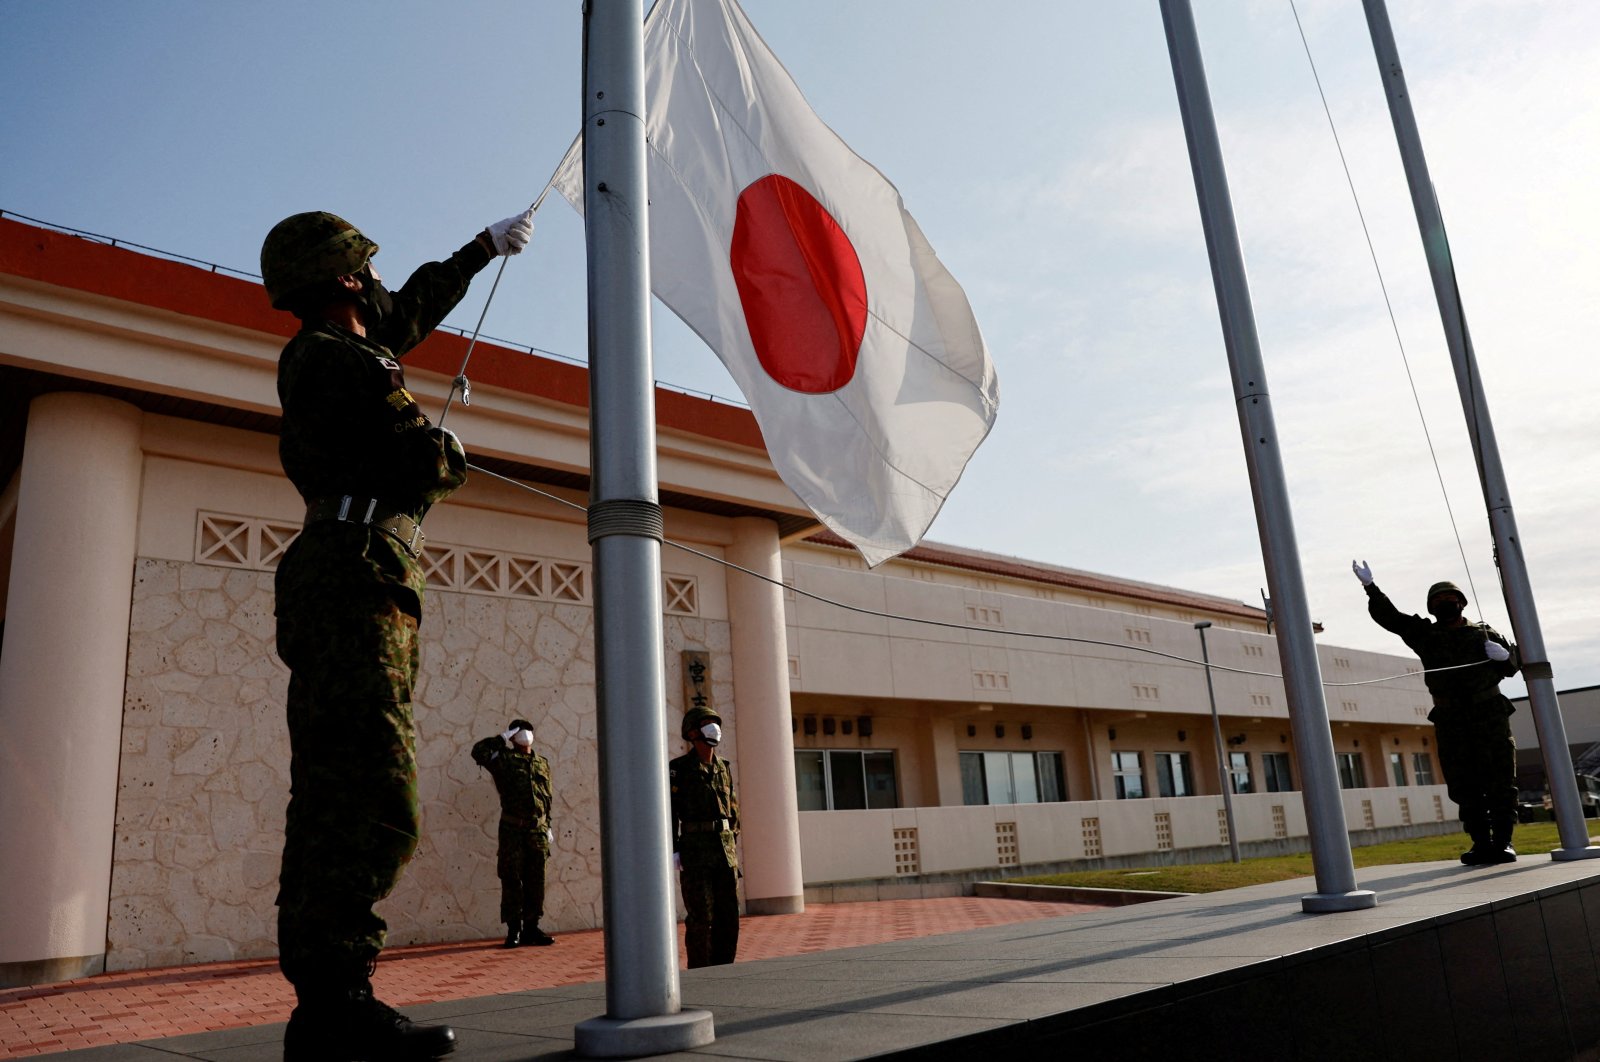 Jepang mempertimbangkan upgrade rudal jarak jauh karena ancaman China: Laporan